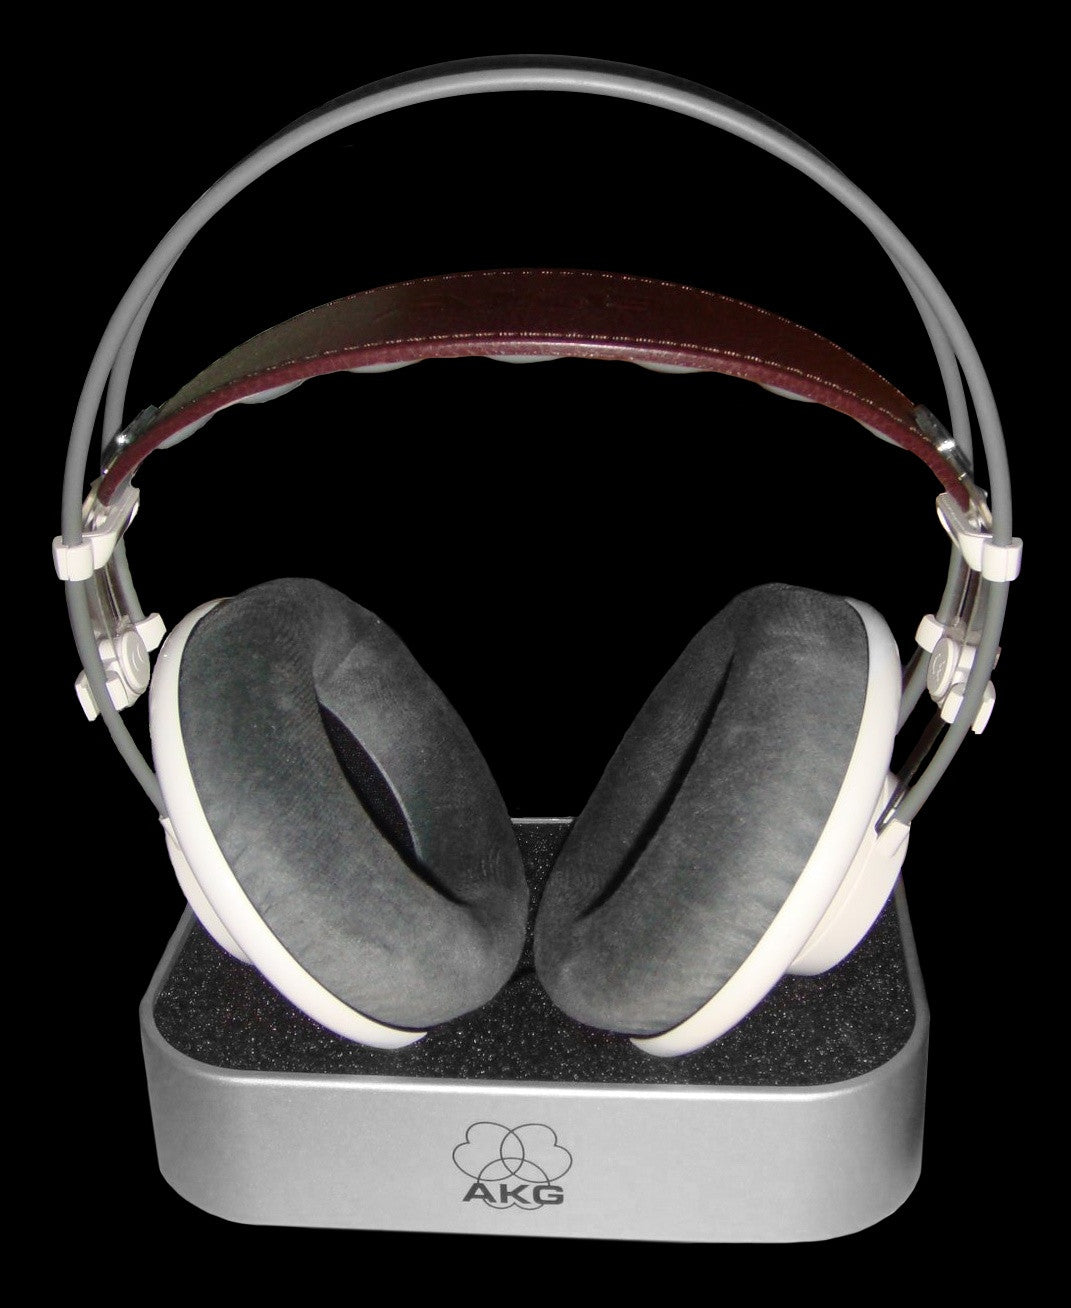 Accessories - AKG - AKG K701 - Professional Audio Design, Inc